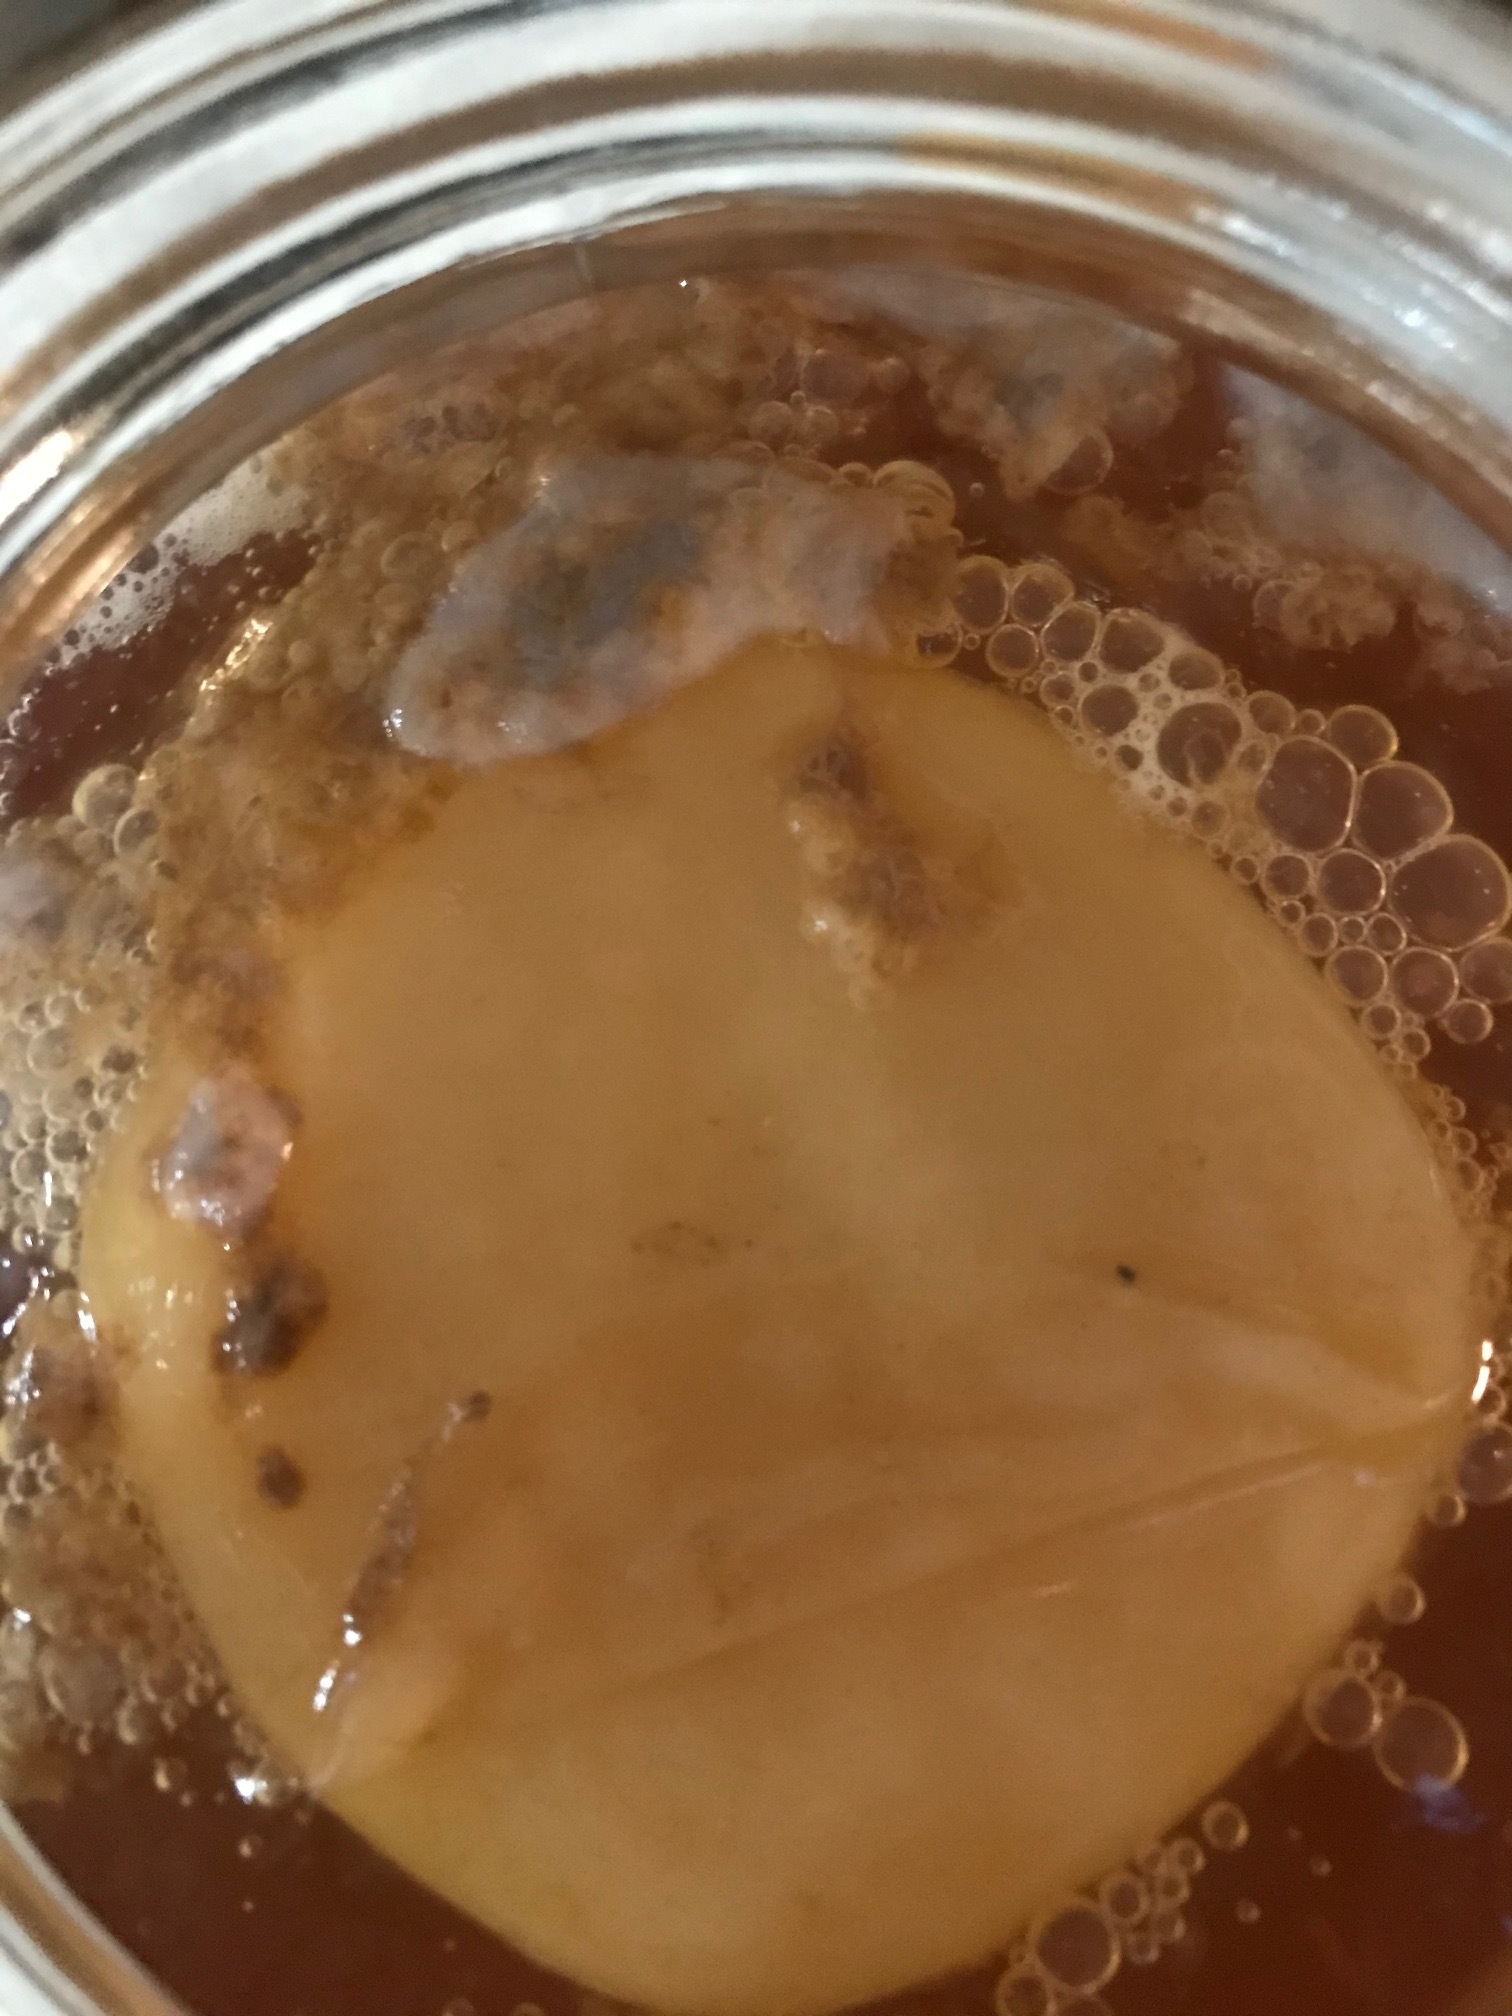 Normal Kombucha Yeast Floating in the Liquid and Under the SCOBY Surface -  Kombucha Kamp